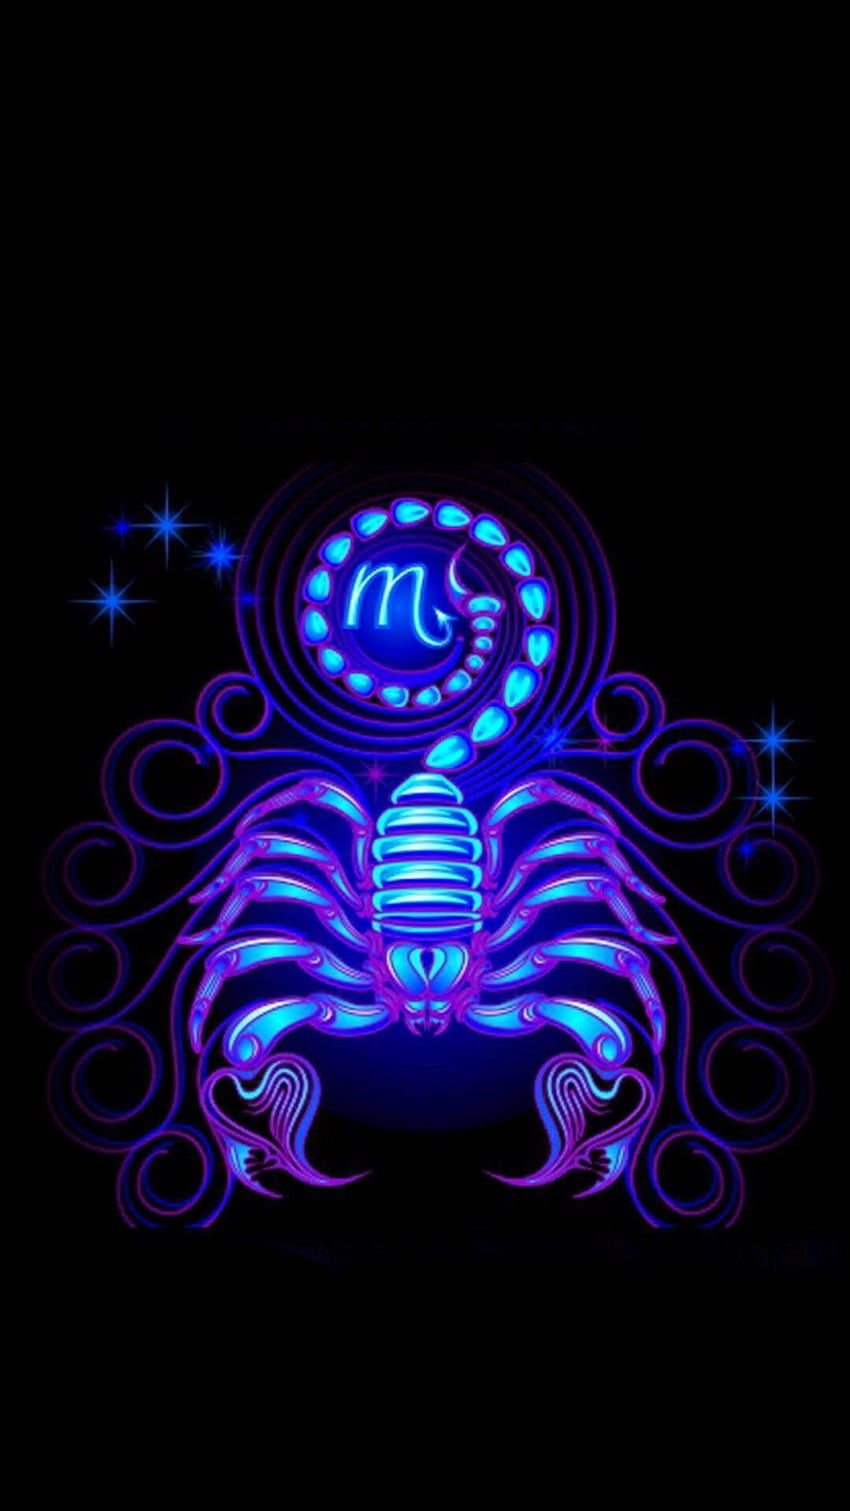 A neon scorpion on a black background - Scorpio